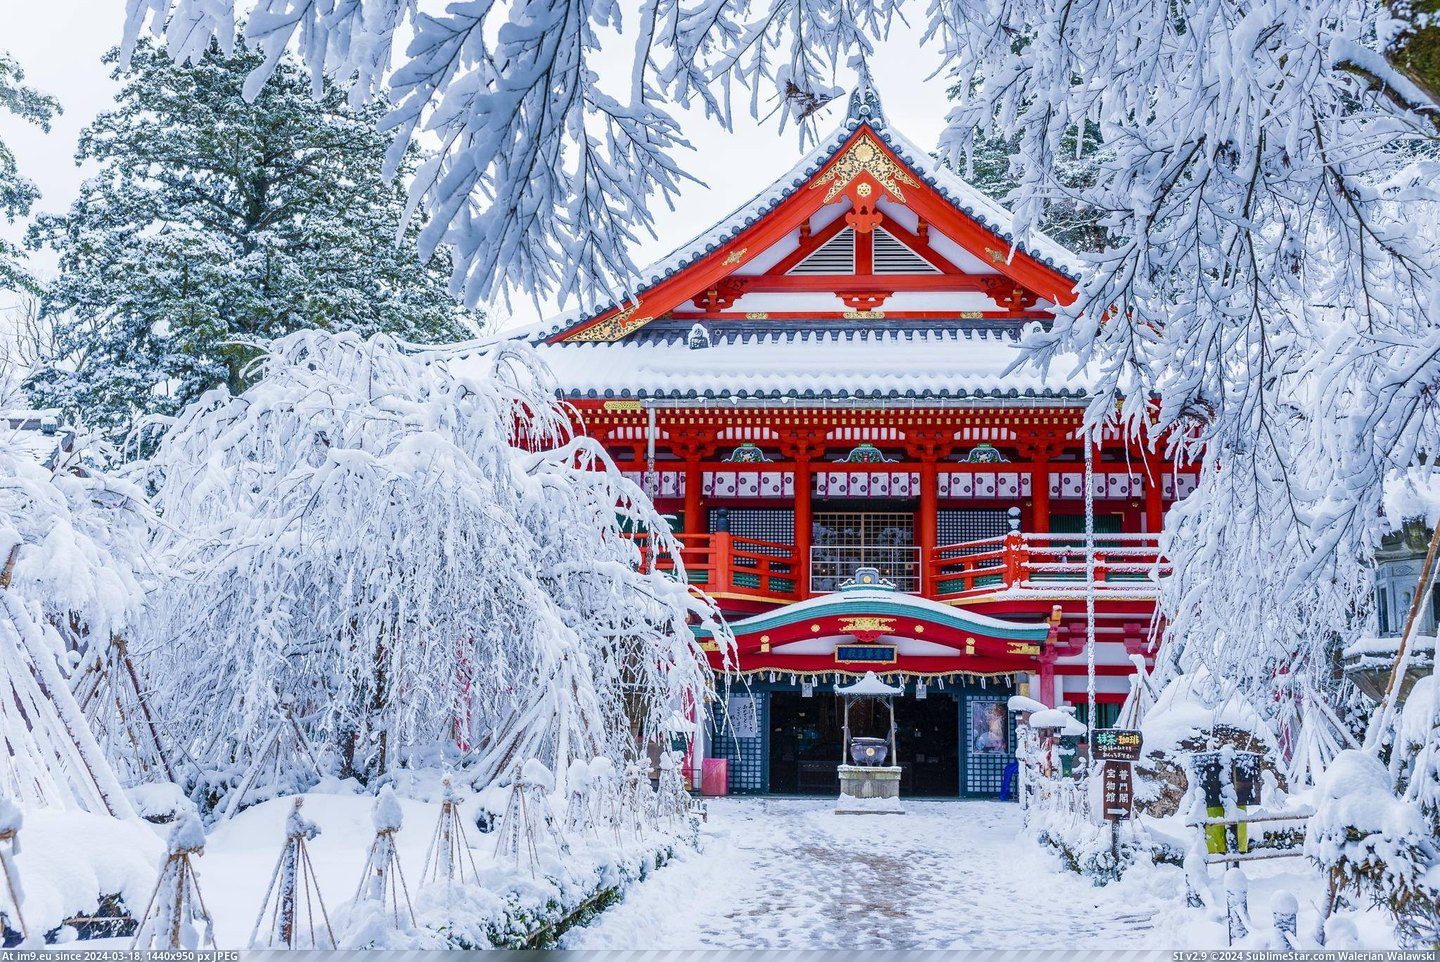 #Winter #Temple #Natadera #Japan [Pics] Natadera Temple in winter, Japan Pic. (Изображение из альбом My r/PICS favs))